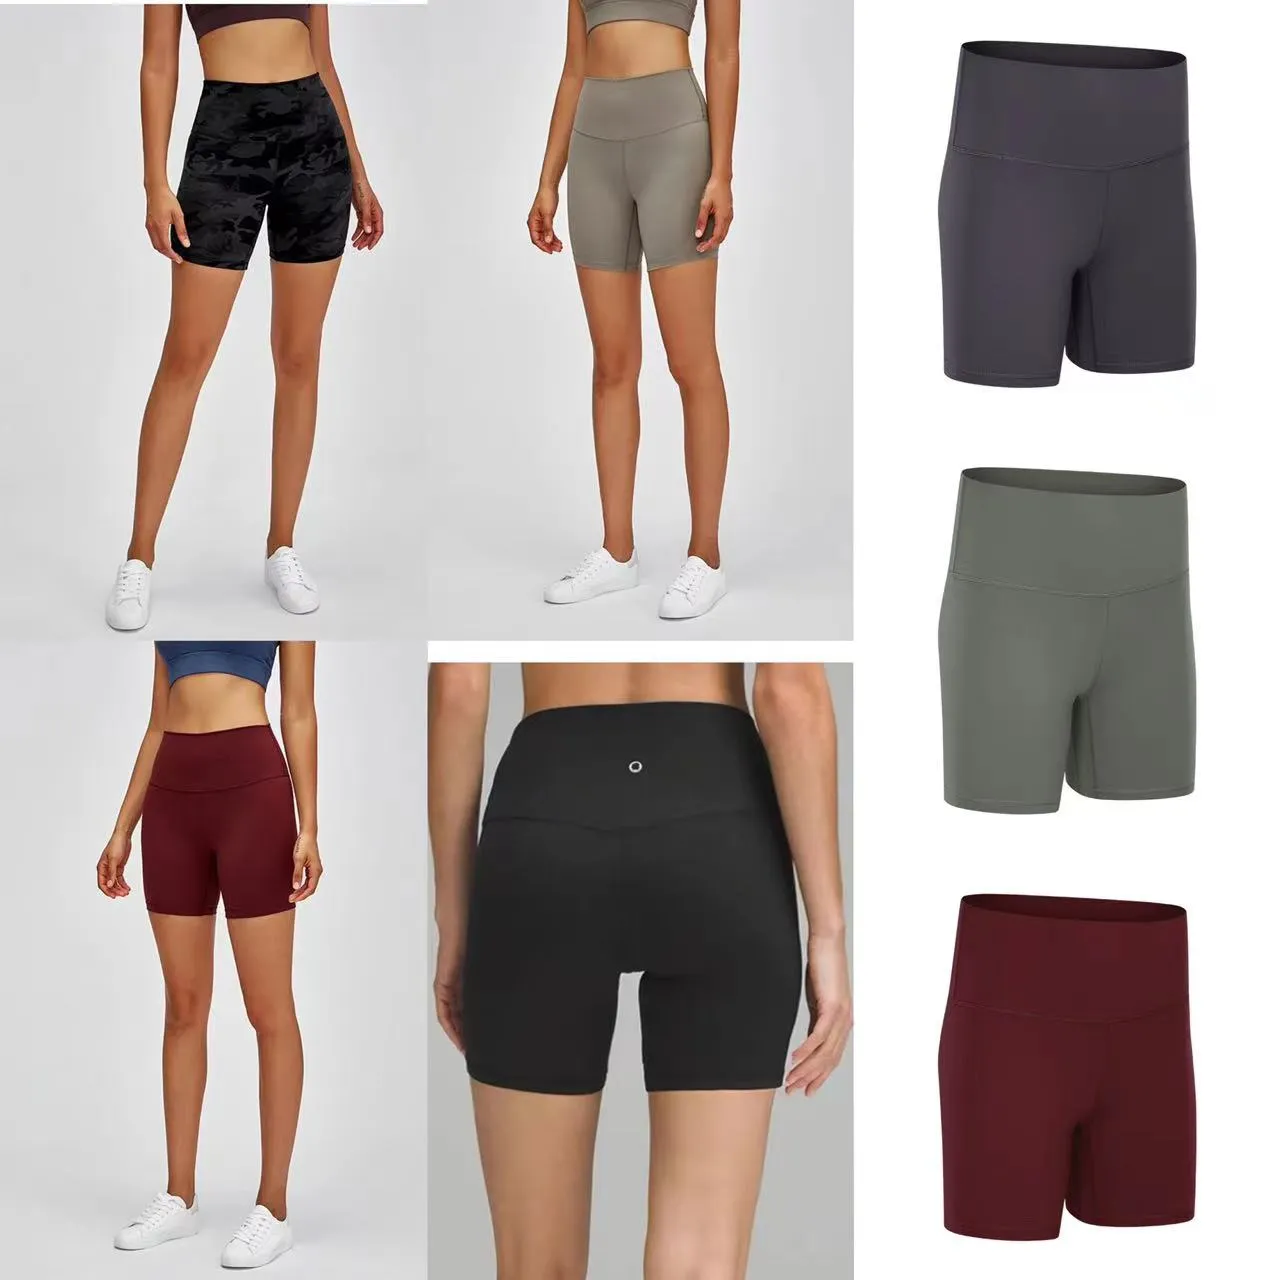 LU Solid Color Nude Yoga Align Shorts Hög midja HIP Tight Elastic Training Women's Hot Pants Running Fitness Sport Biker Golf Tennis Workout Leggings 6 "